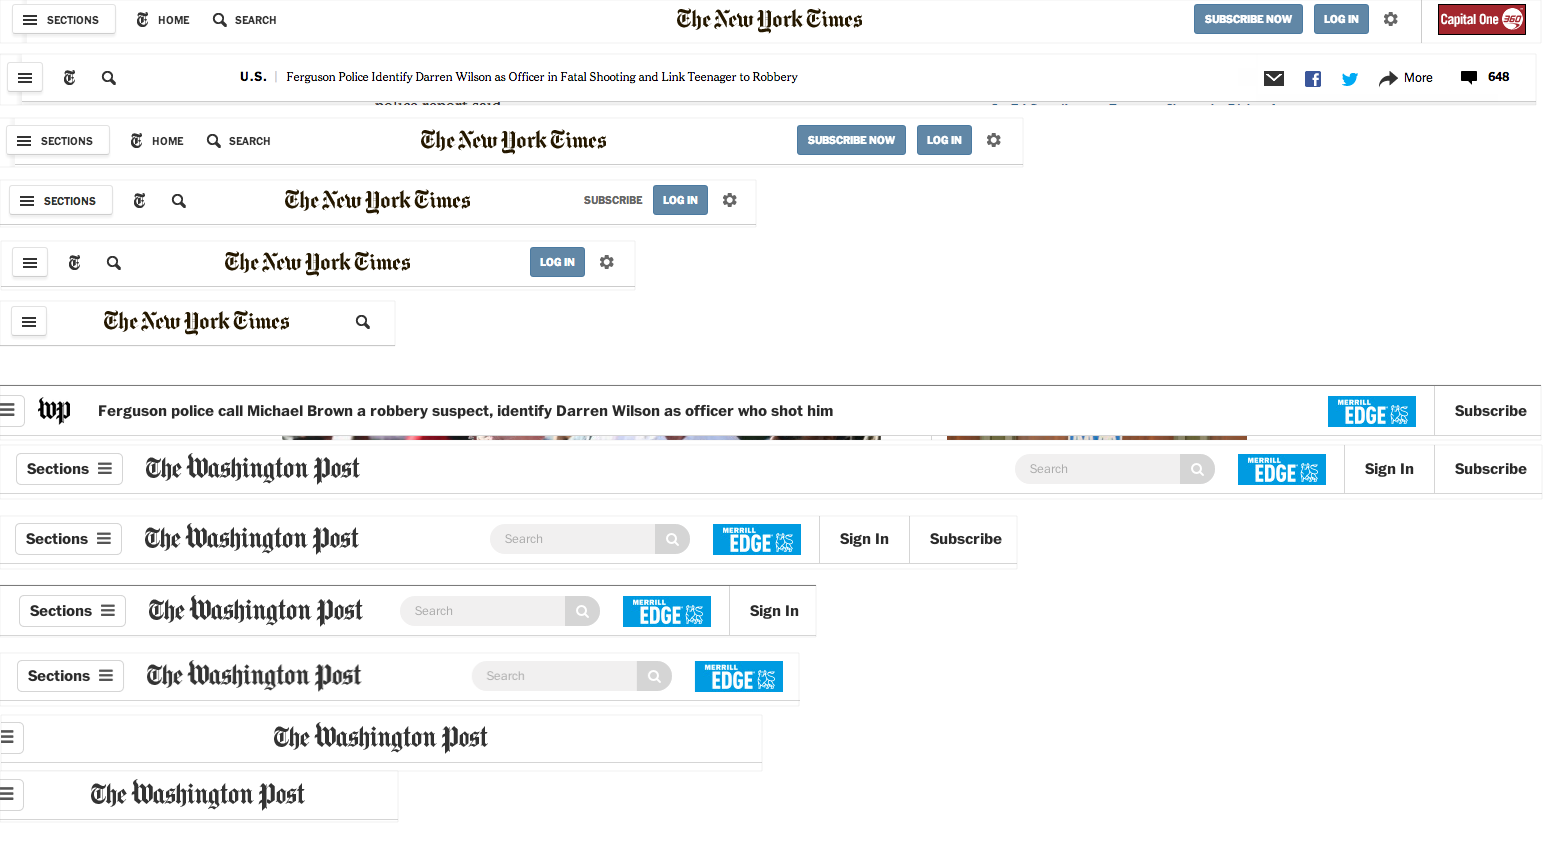 Screenshots responsive navigation from nytimes.com and washingtonpost.com